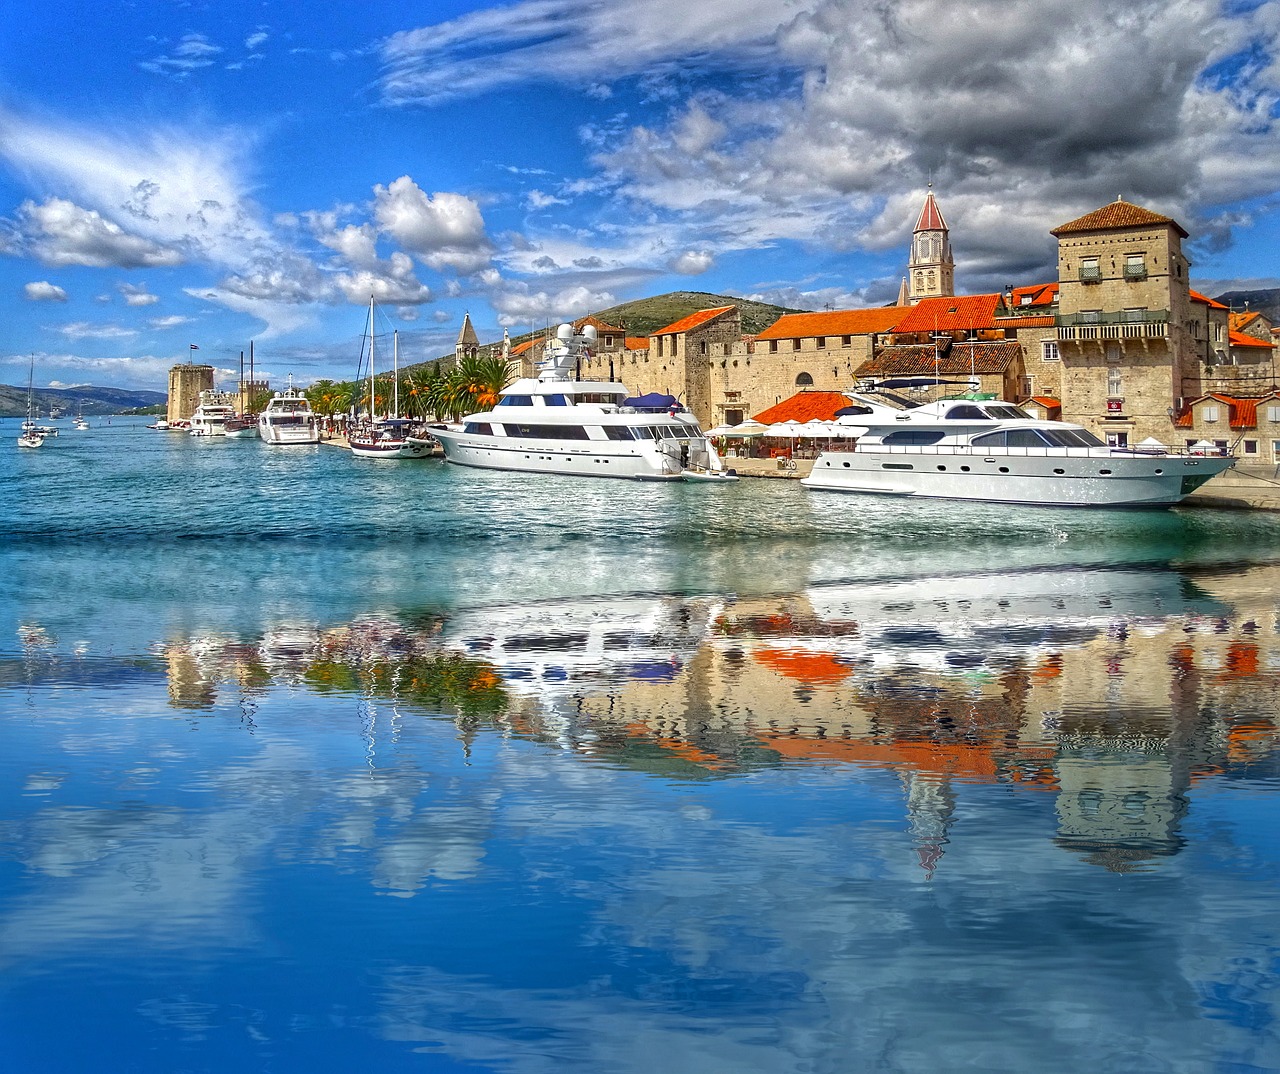 7-Day Adventure in Trogir, Croatia